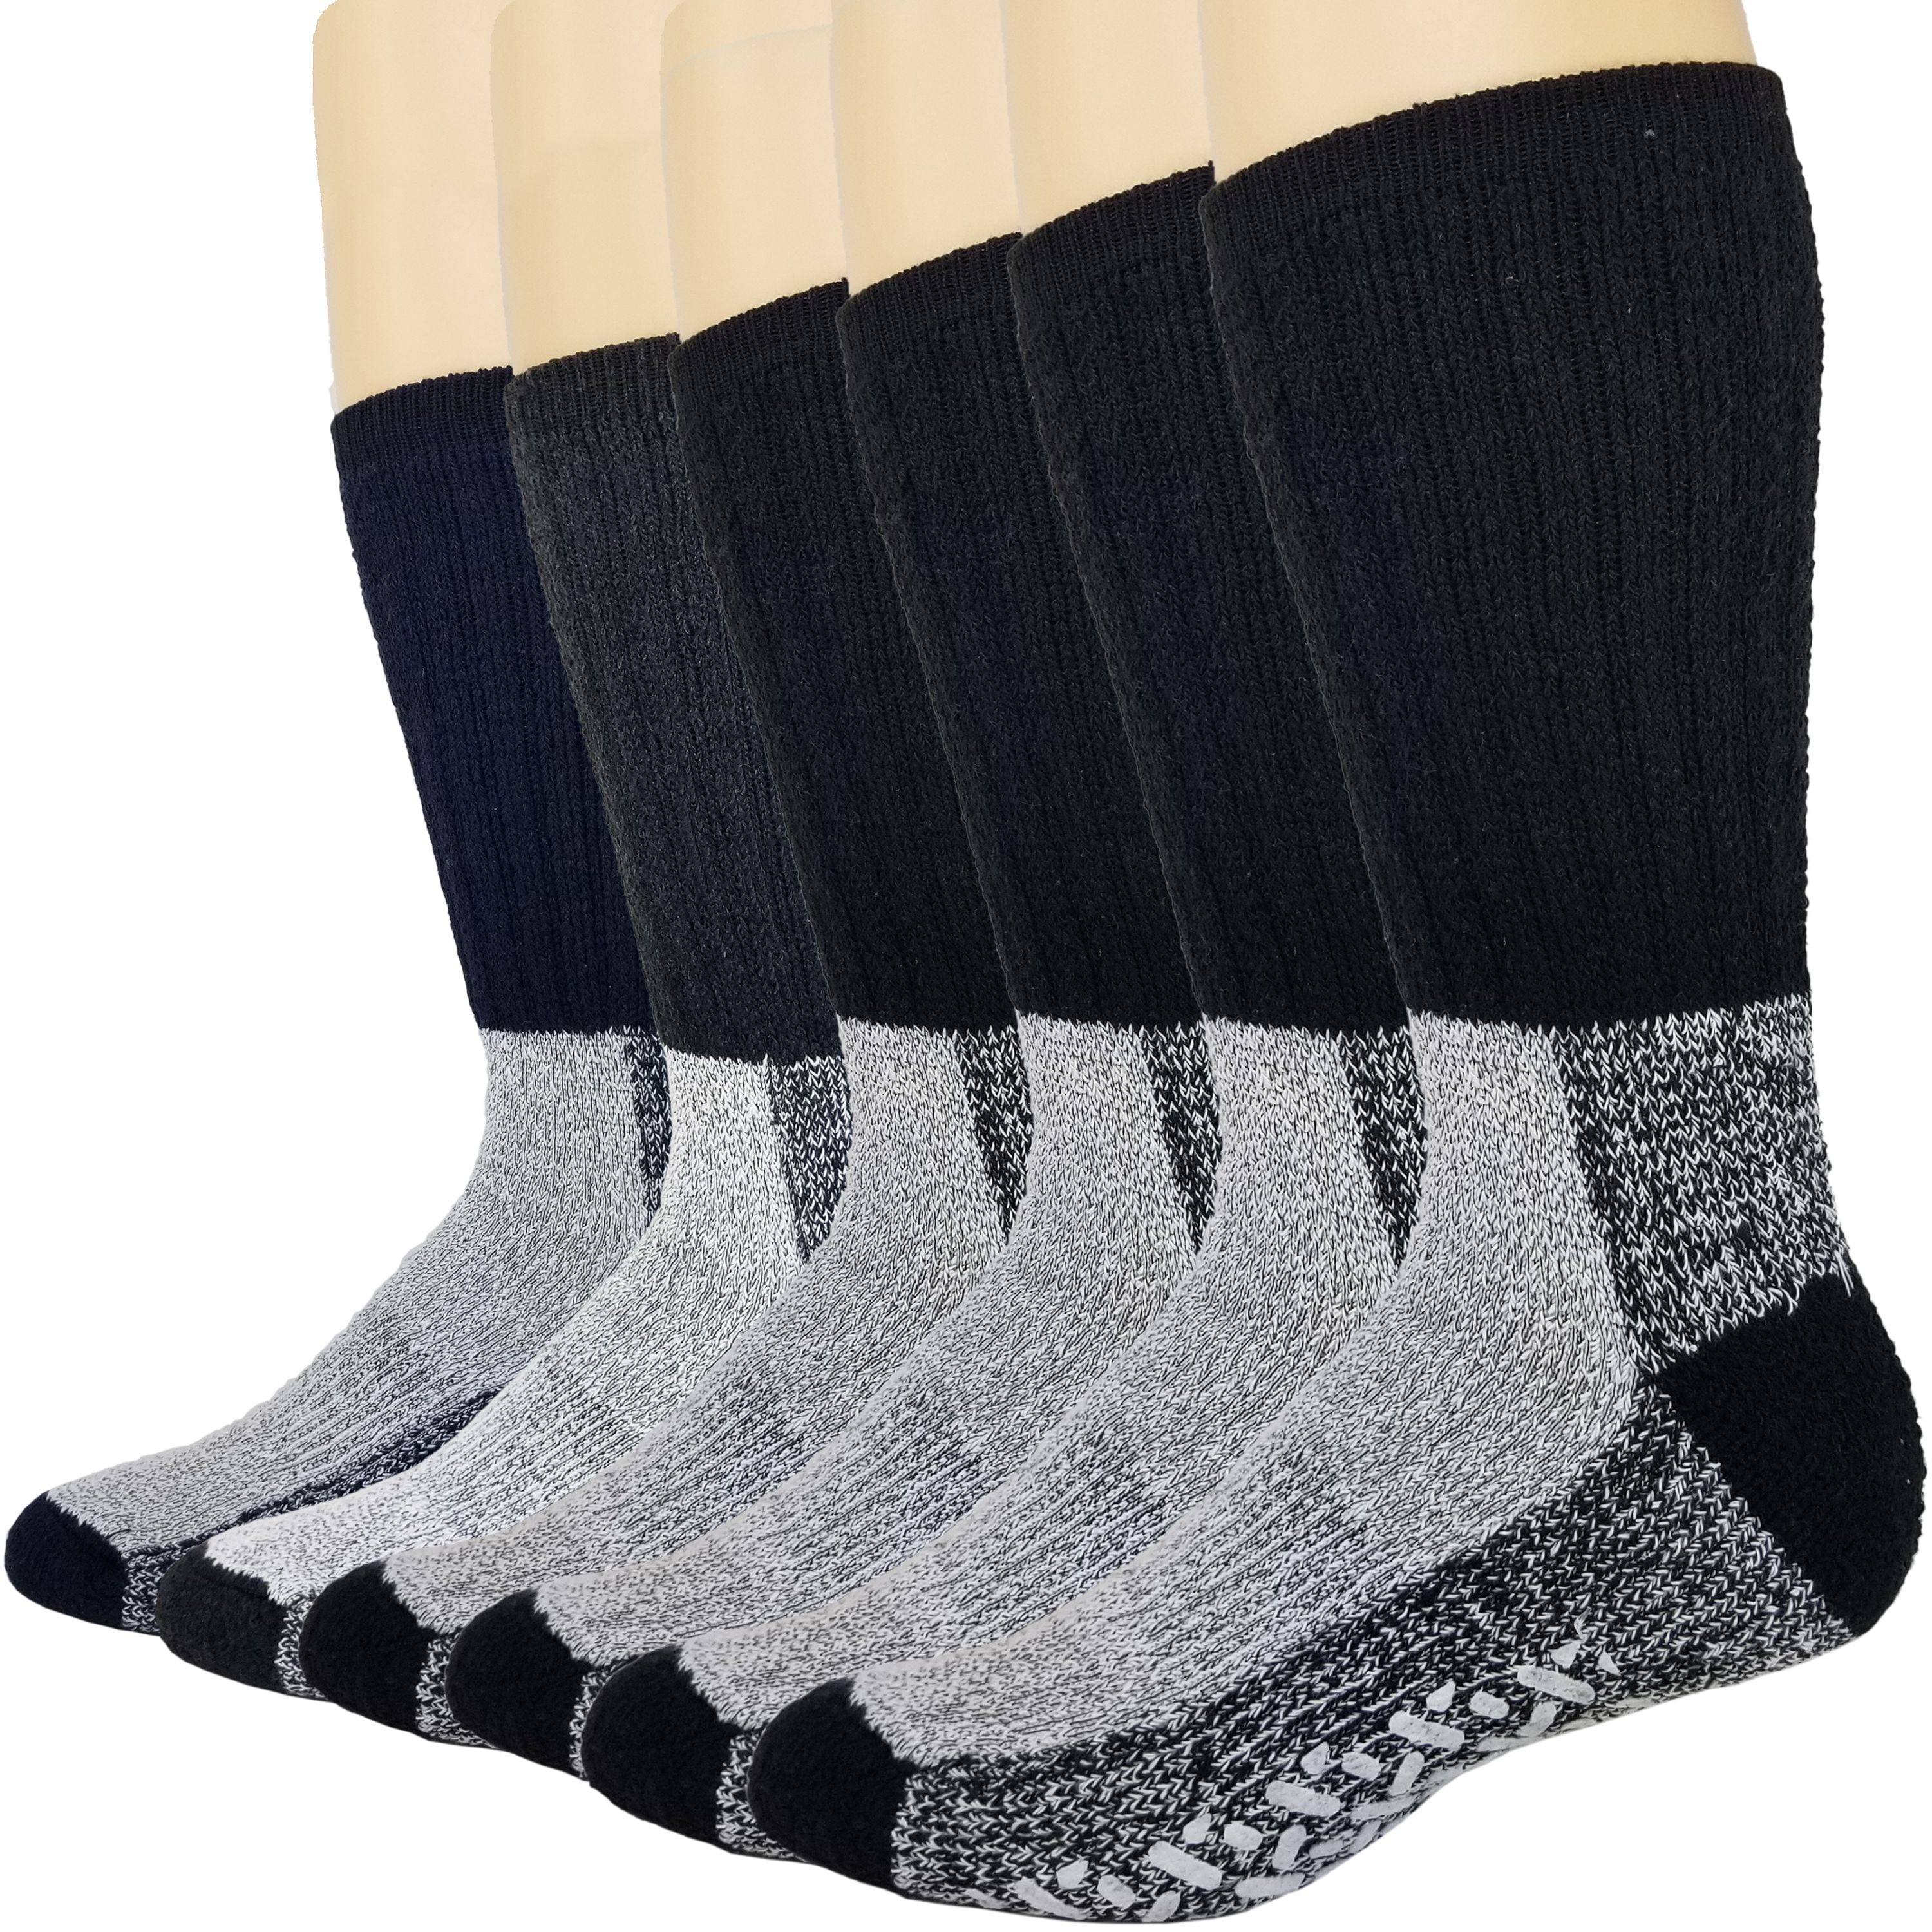 Black 4 Pairs Organic Merino Wool Socks for Men Thermal Hiking Running Socks Crew Boot Socks for Outdoor Activities 